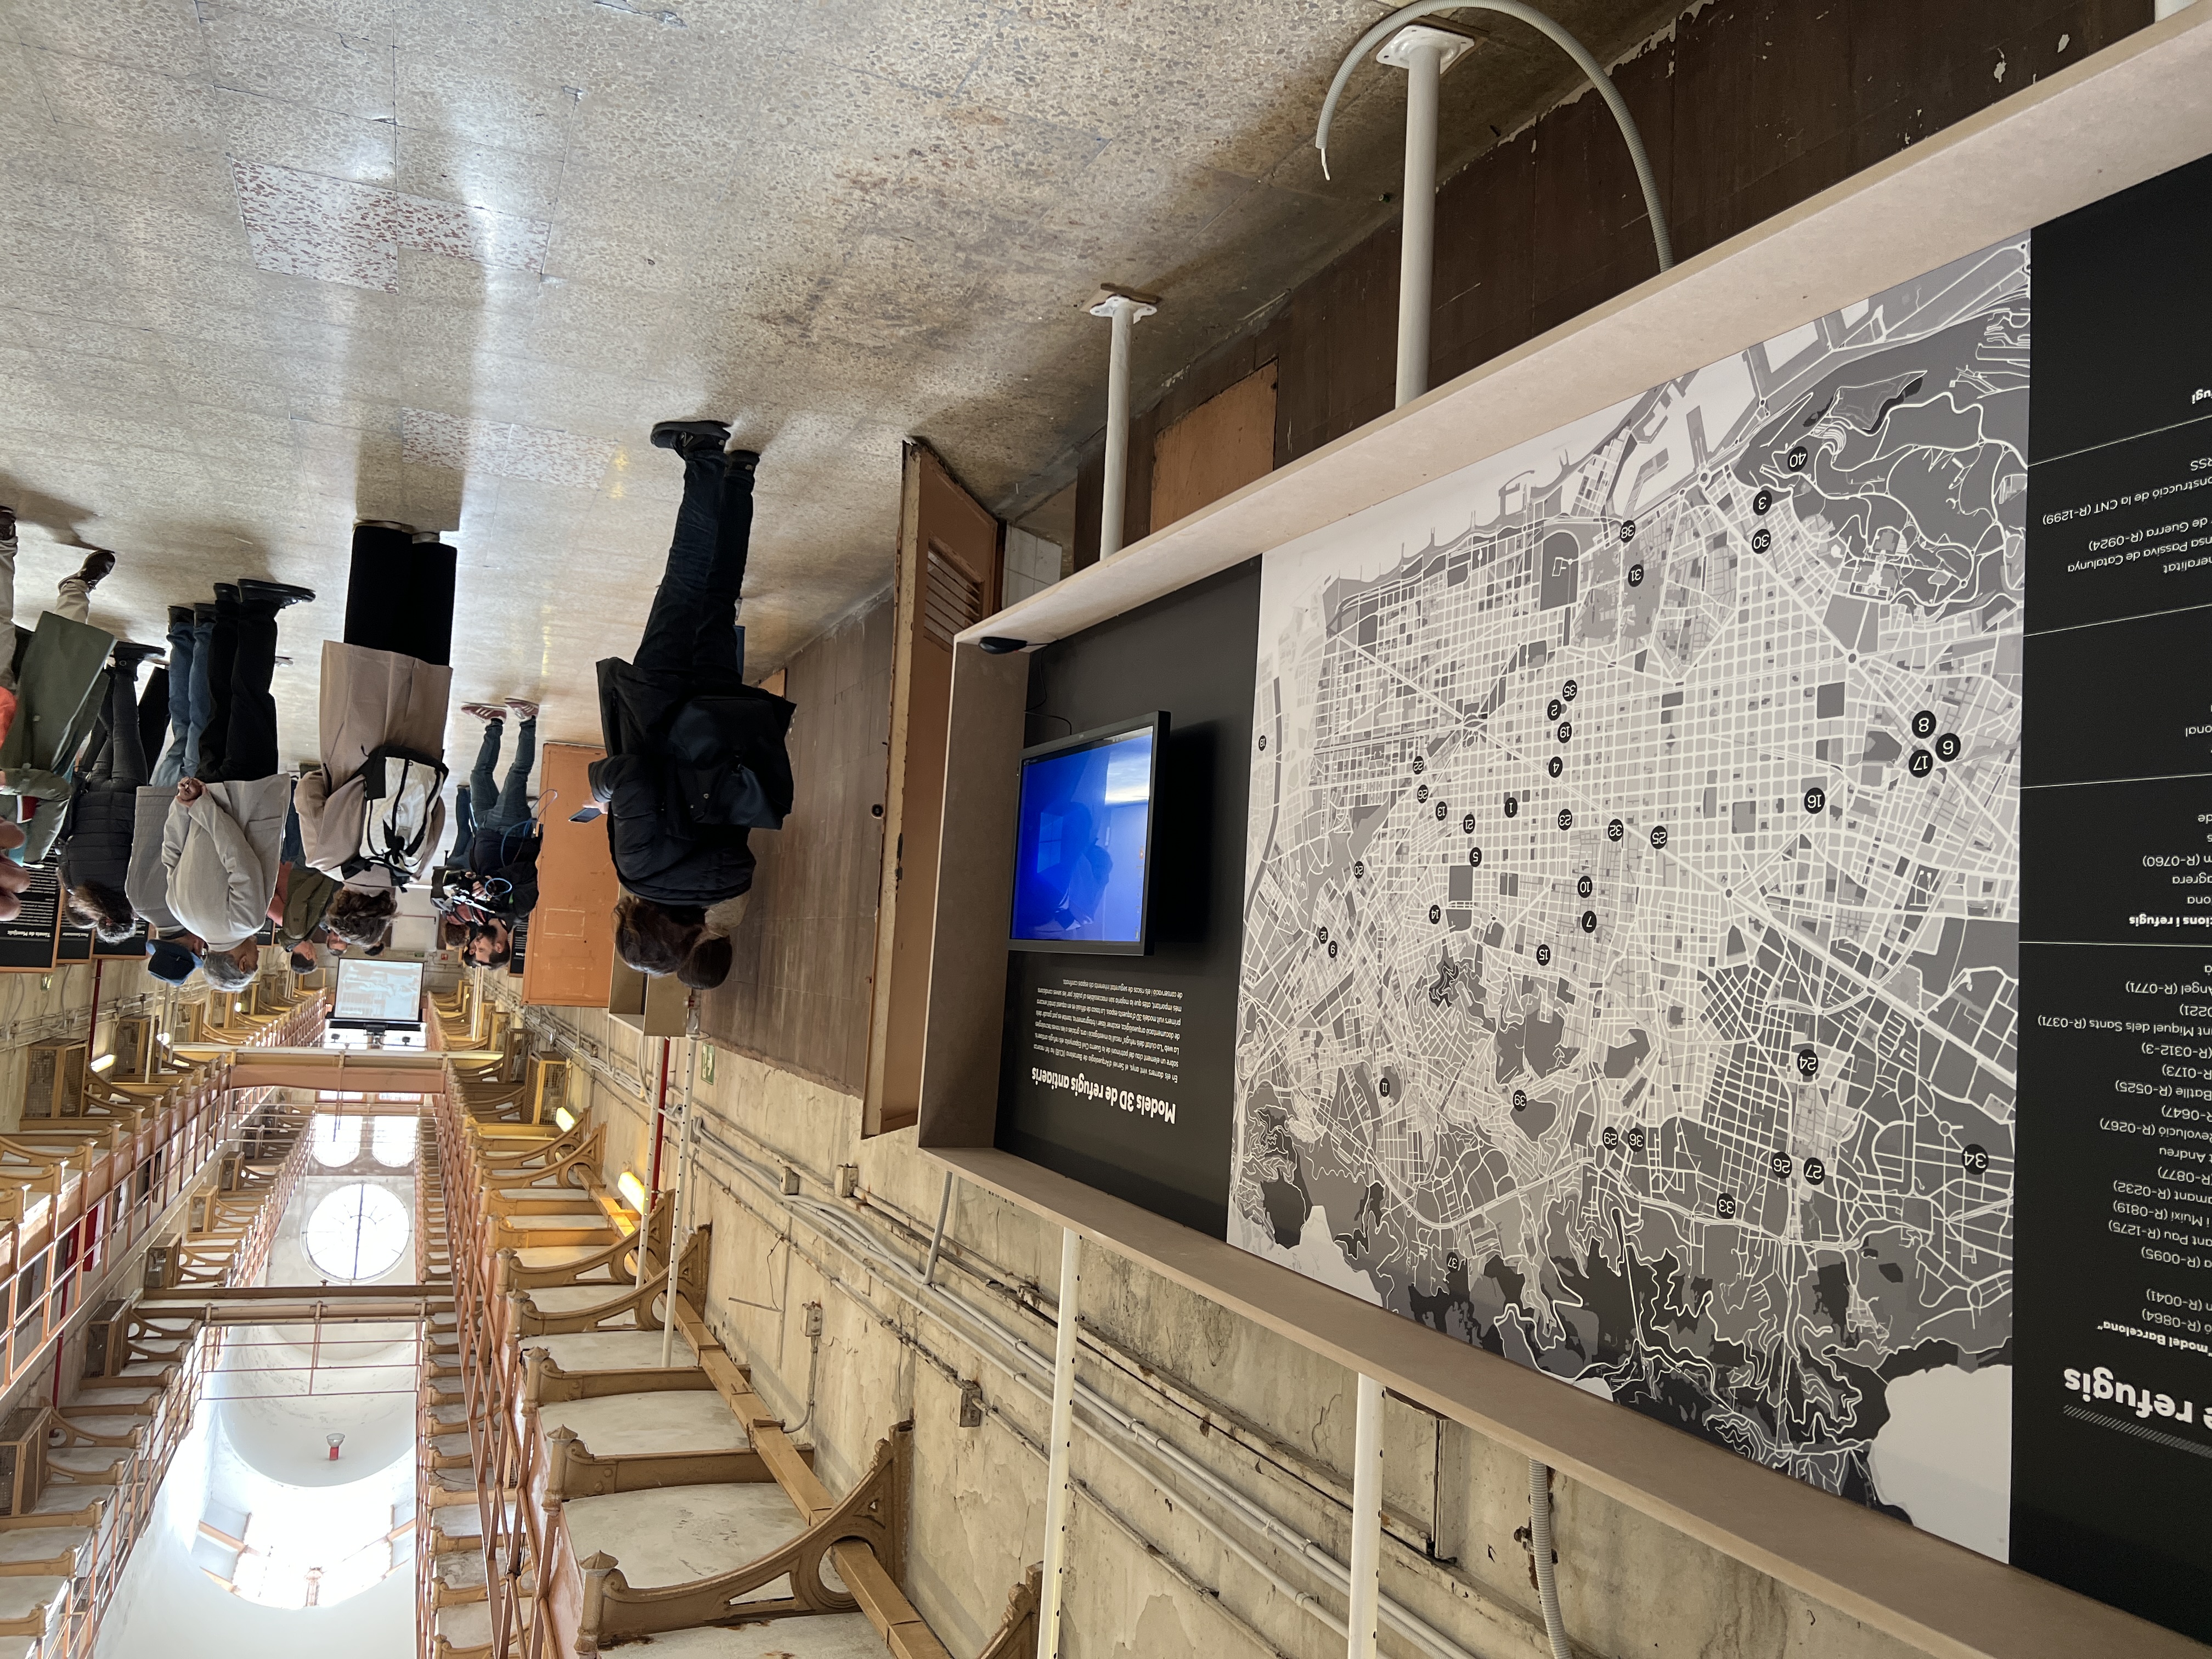 Part of the 1,322 bomb shelters exhibition in Barcelona 'La Model' prison